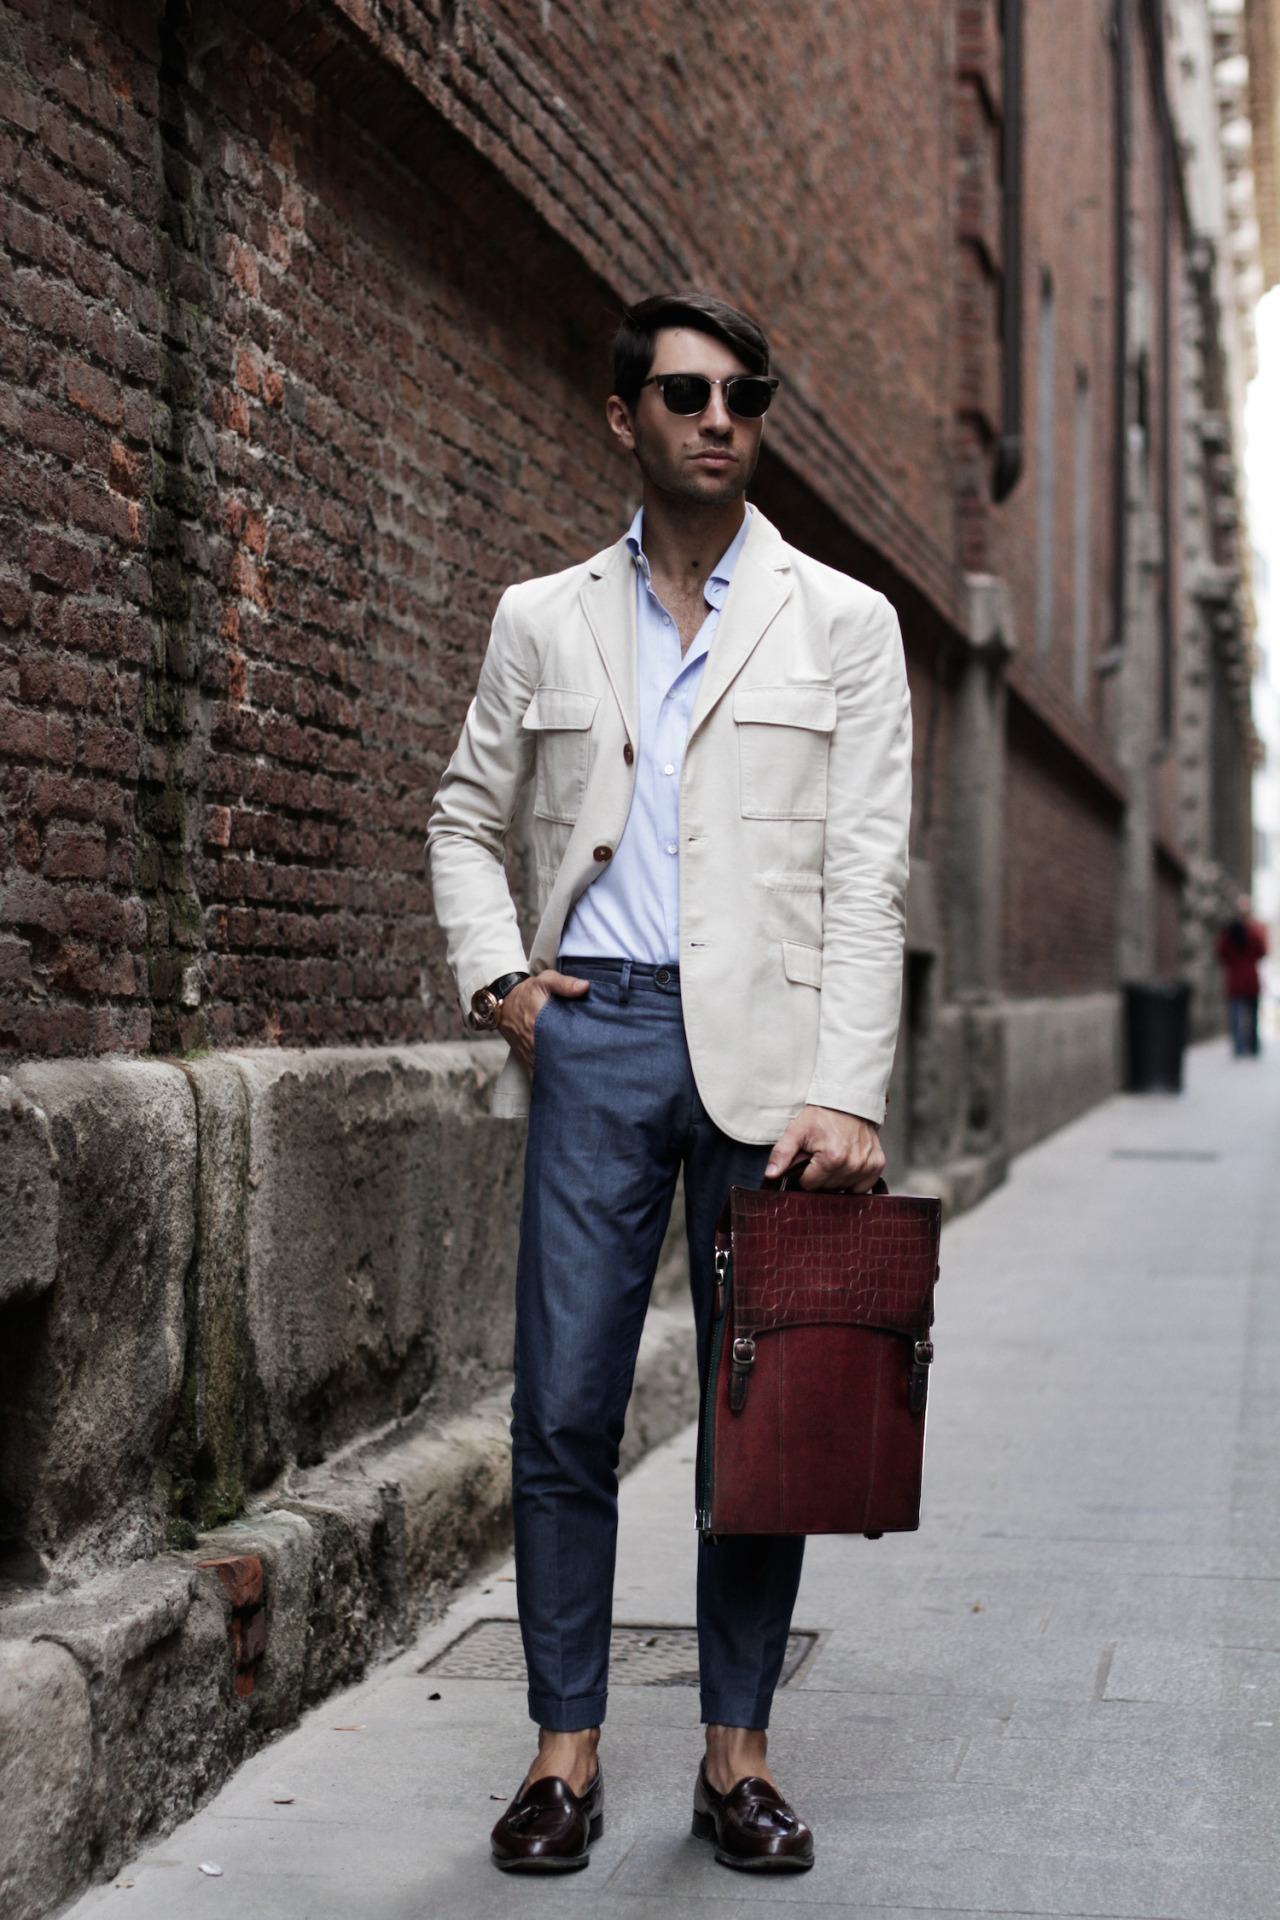 Men’s Street Style Inspiration #11 | MenStyle1- Men's Style Blog